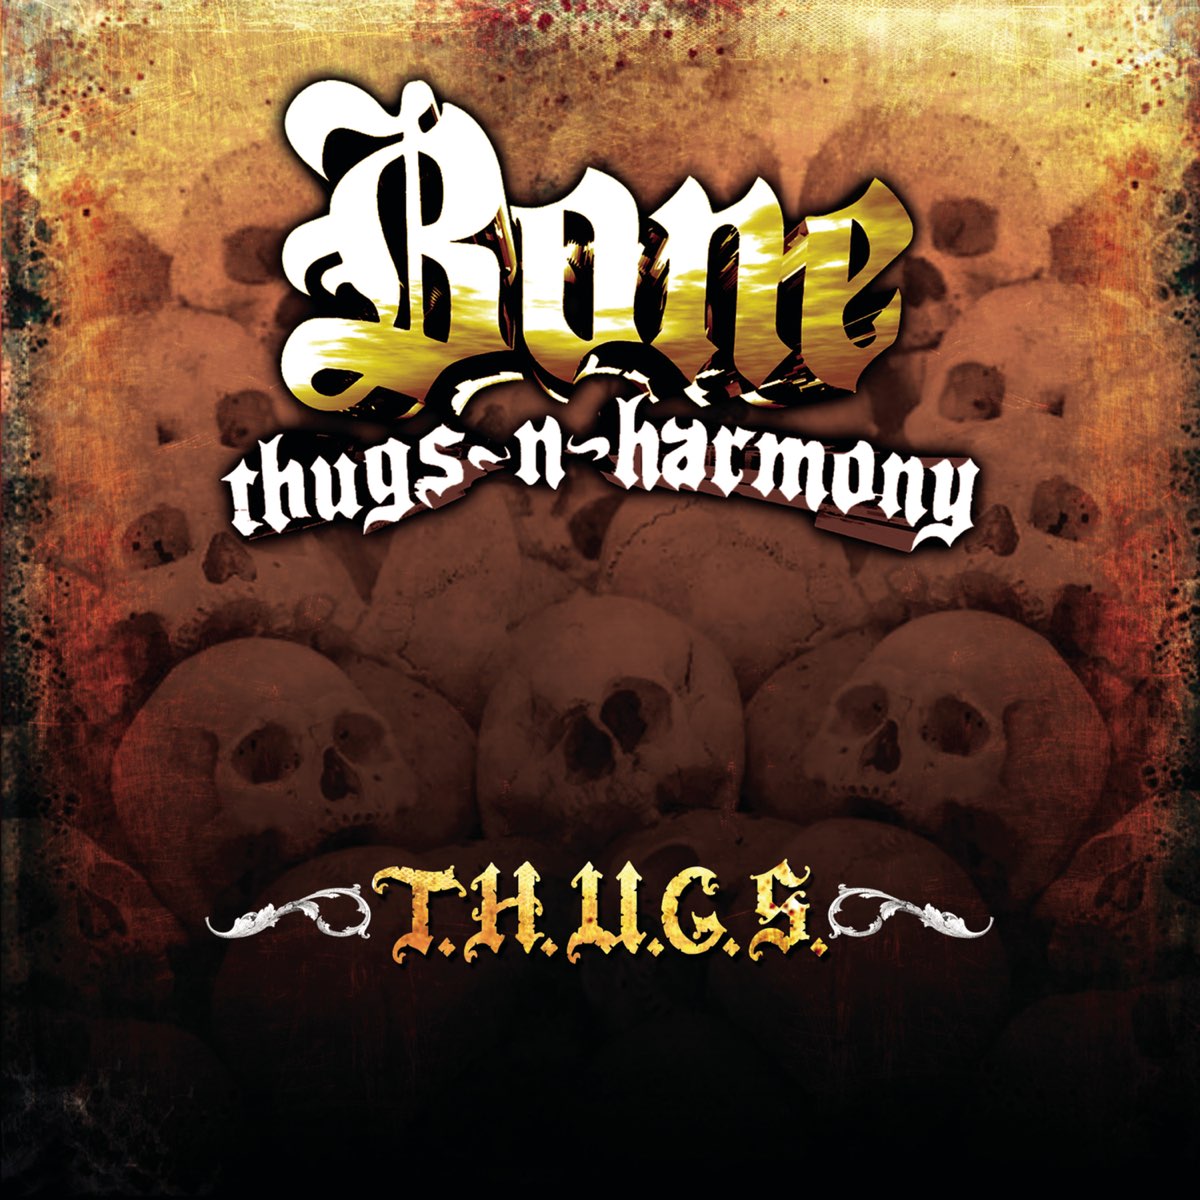 Bones n harmony. Bone Thugs-n-Harmony. Thugs. Bone Thugs -n - Harmony Rapper. Bone Thugs & Harmony strength and Loyalty.